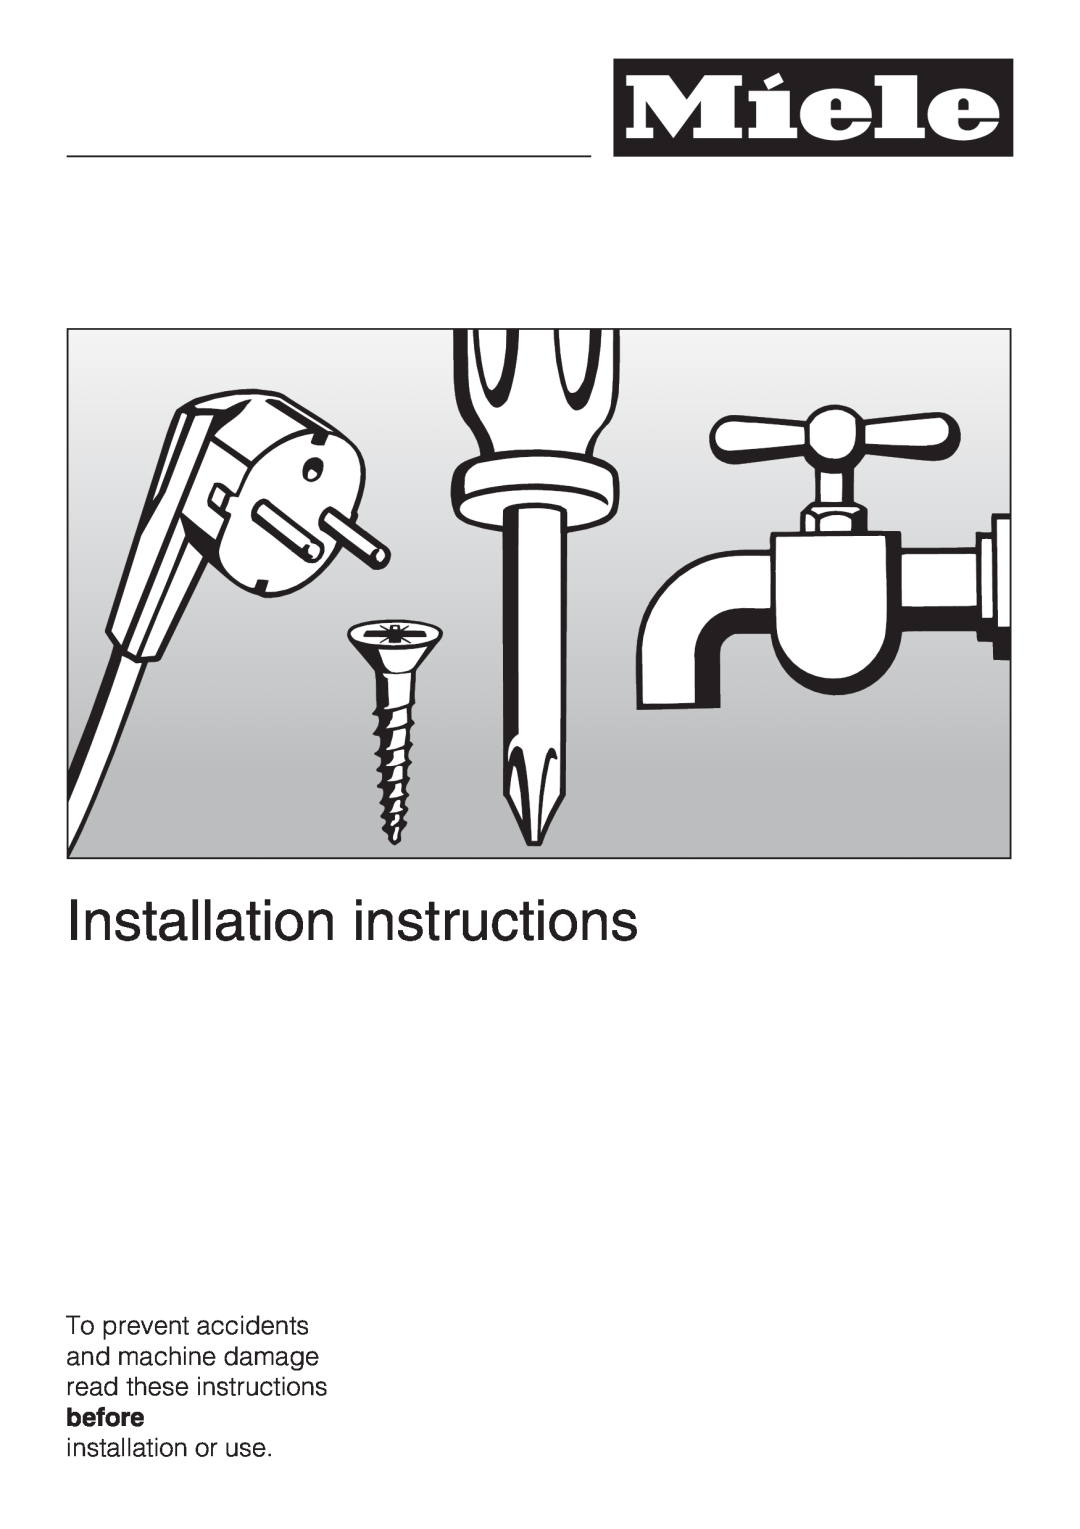 Miele KWT 4154 UG-1 installation instructions Installation instructions, installation or use 